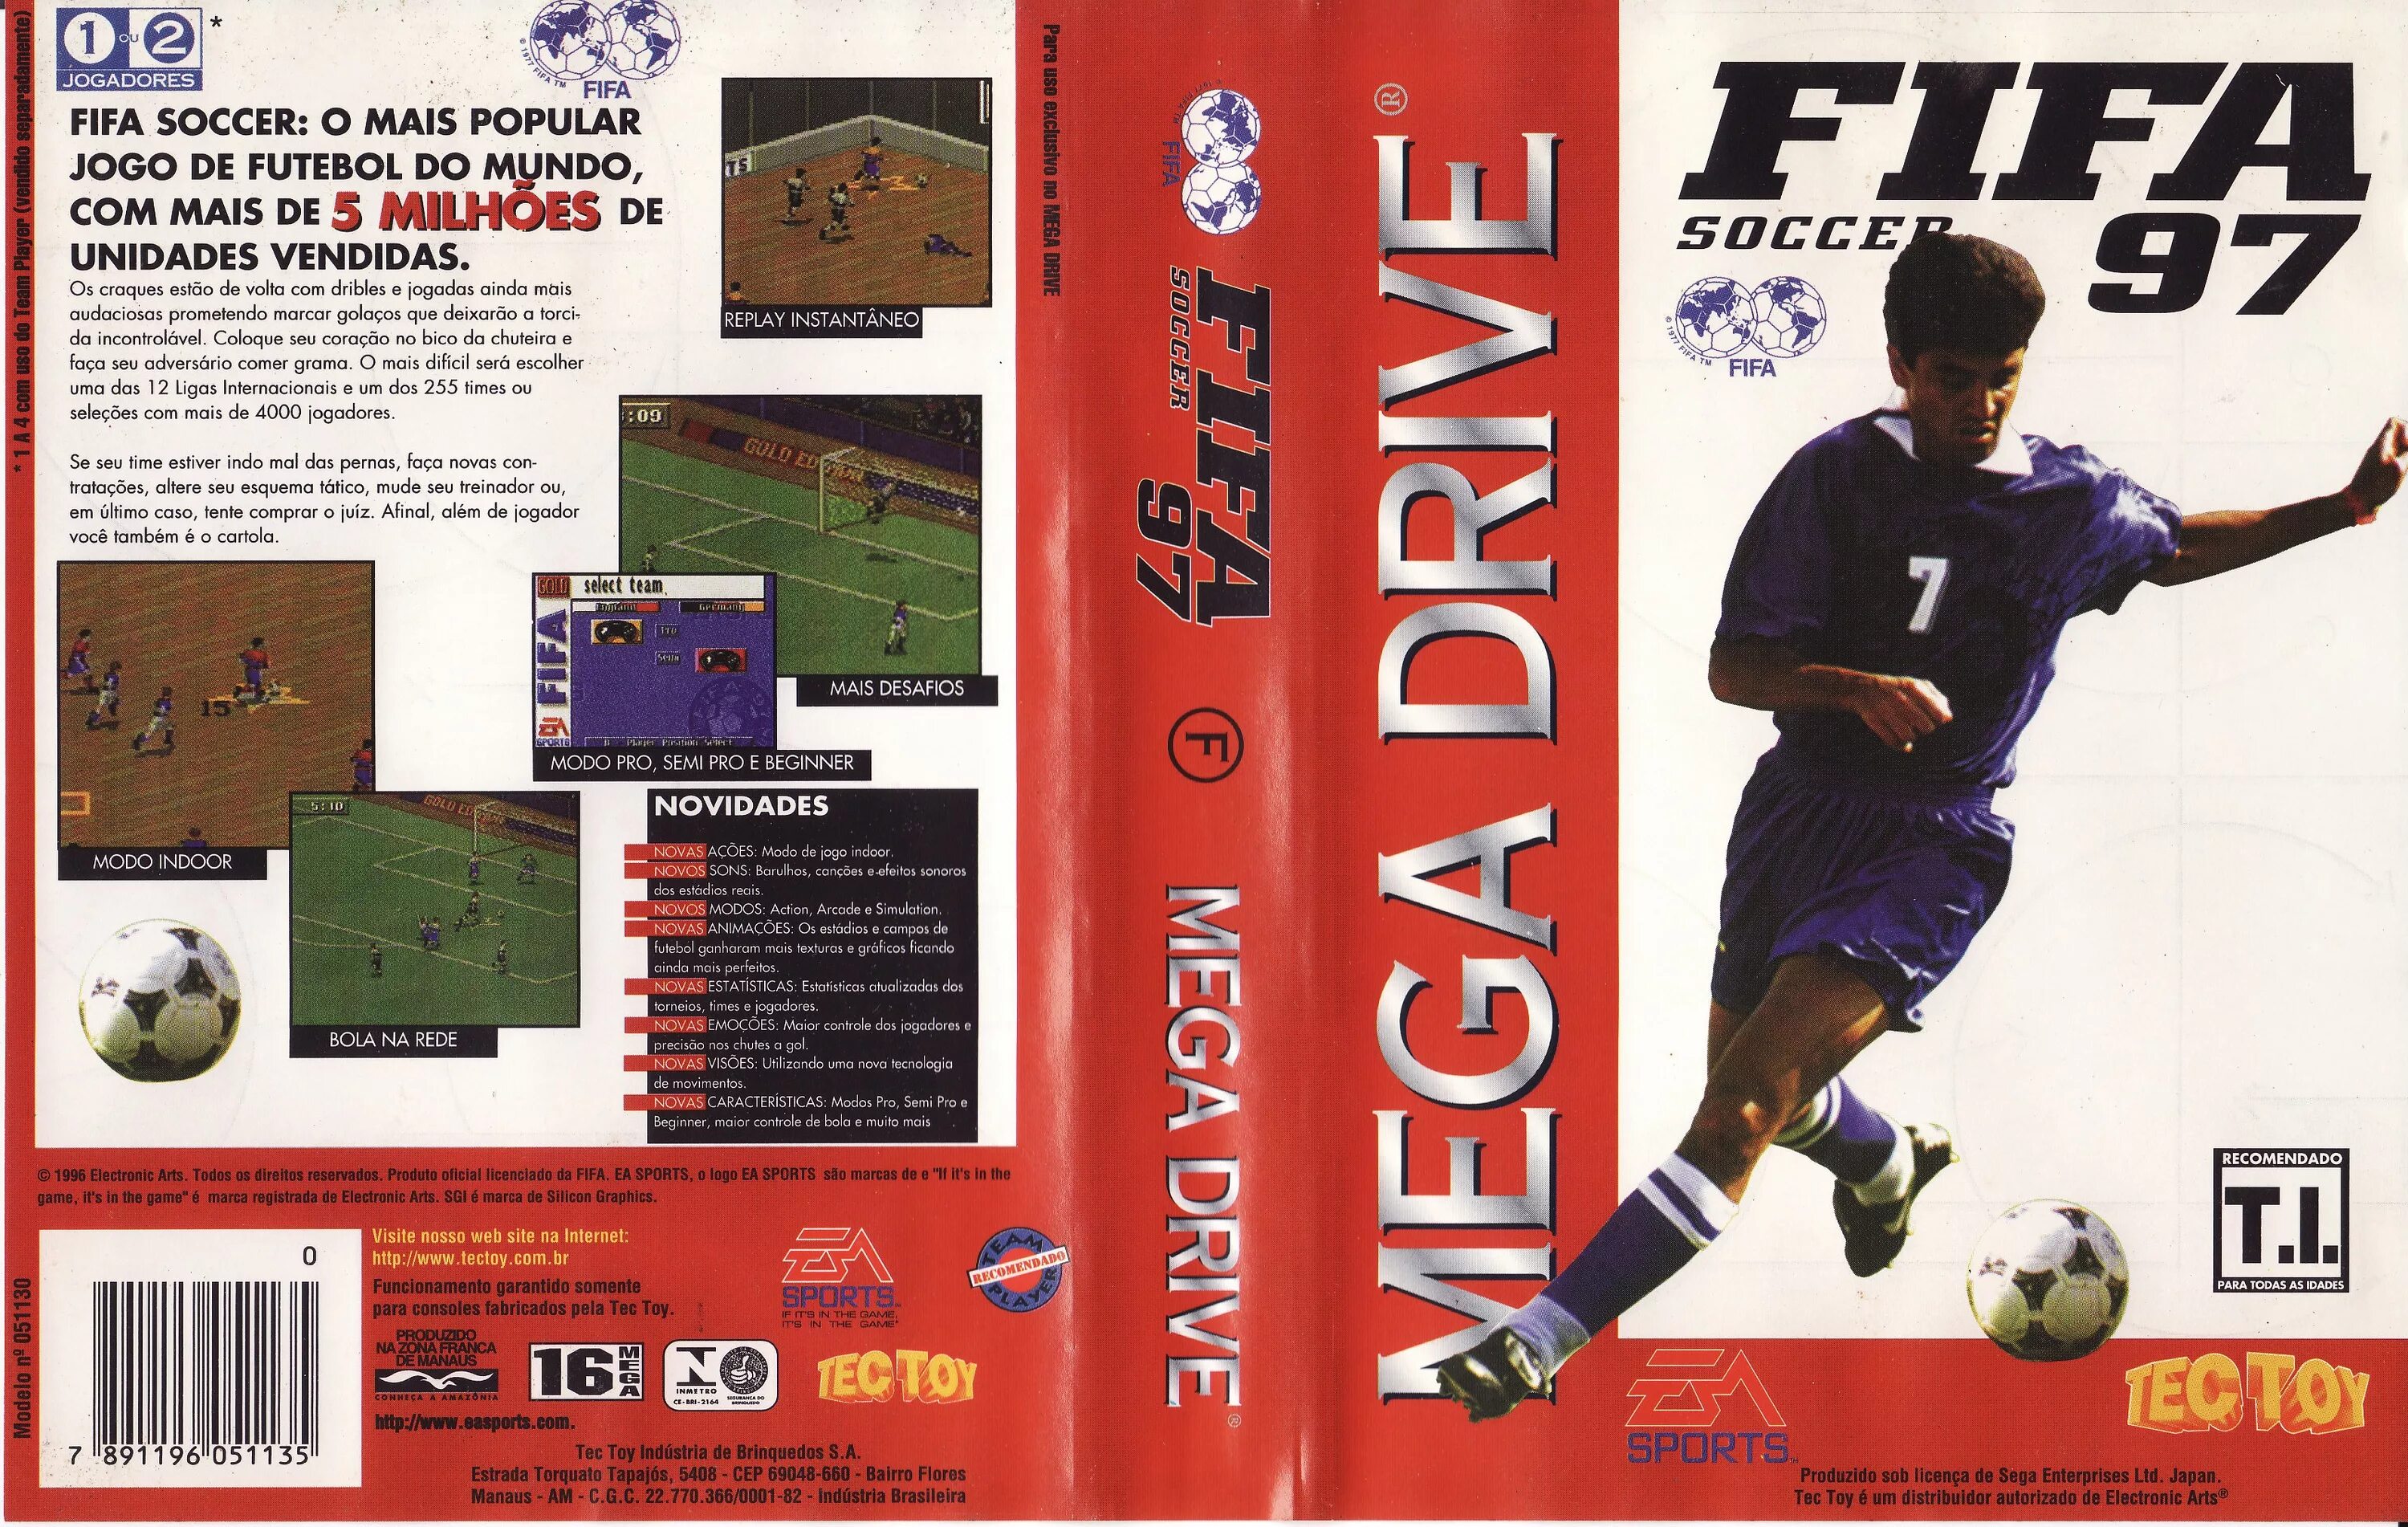 Fifa эмулятор. FIFA Soccer 97. Сега футбол 97. FIFA 97 игра сега. ФИФА 2000 на сега.